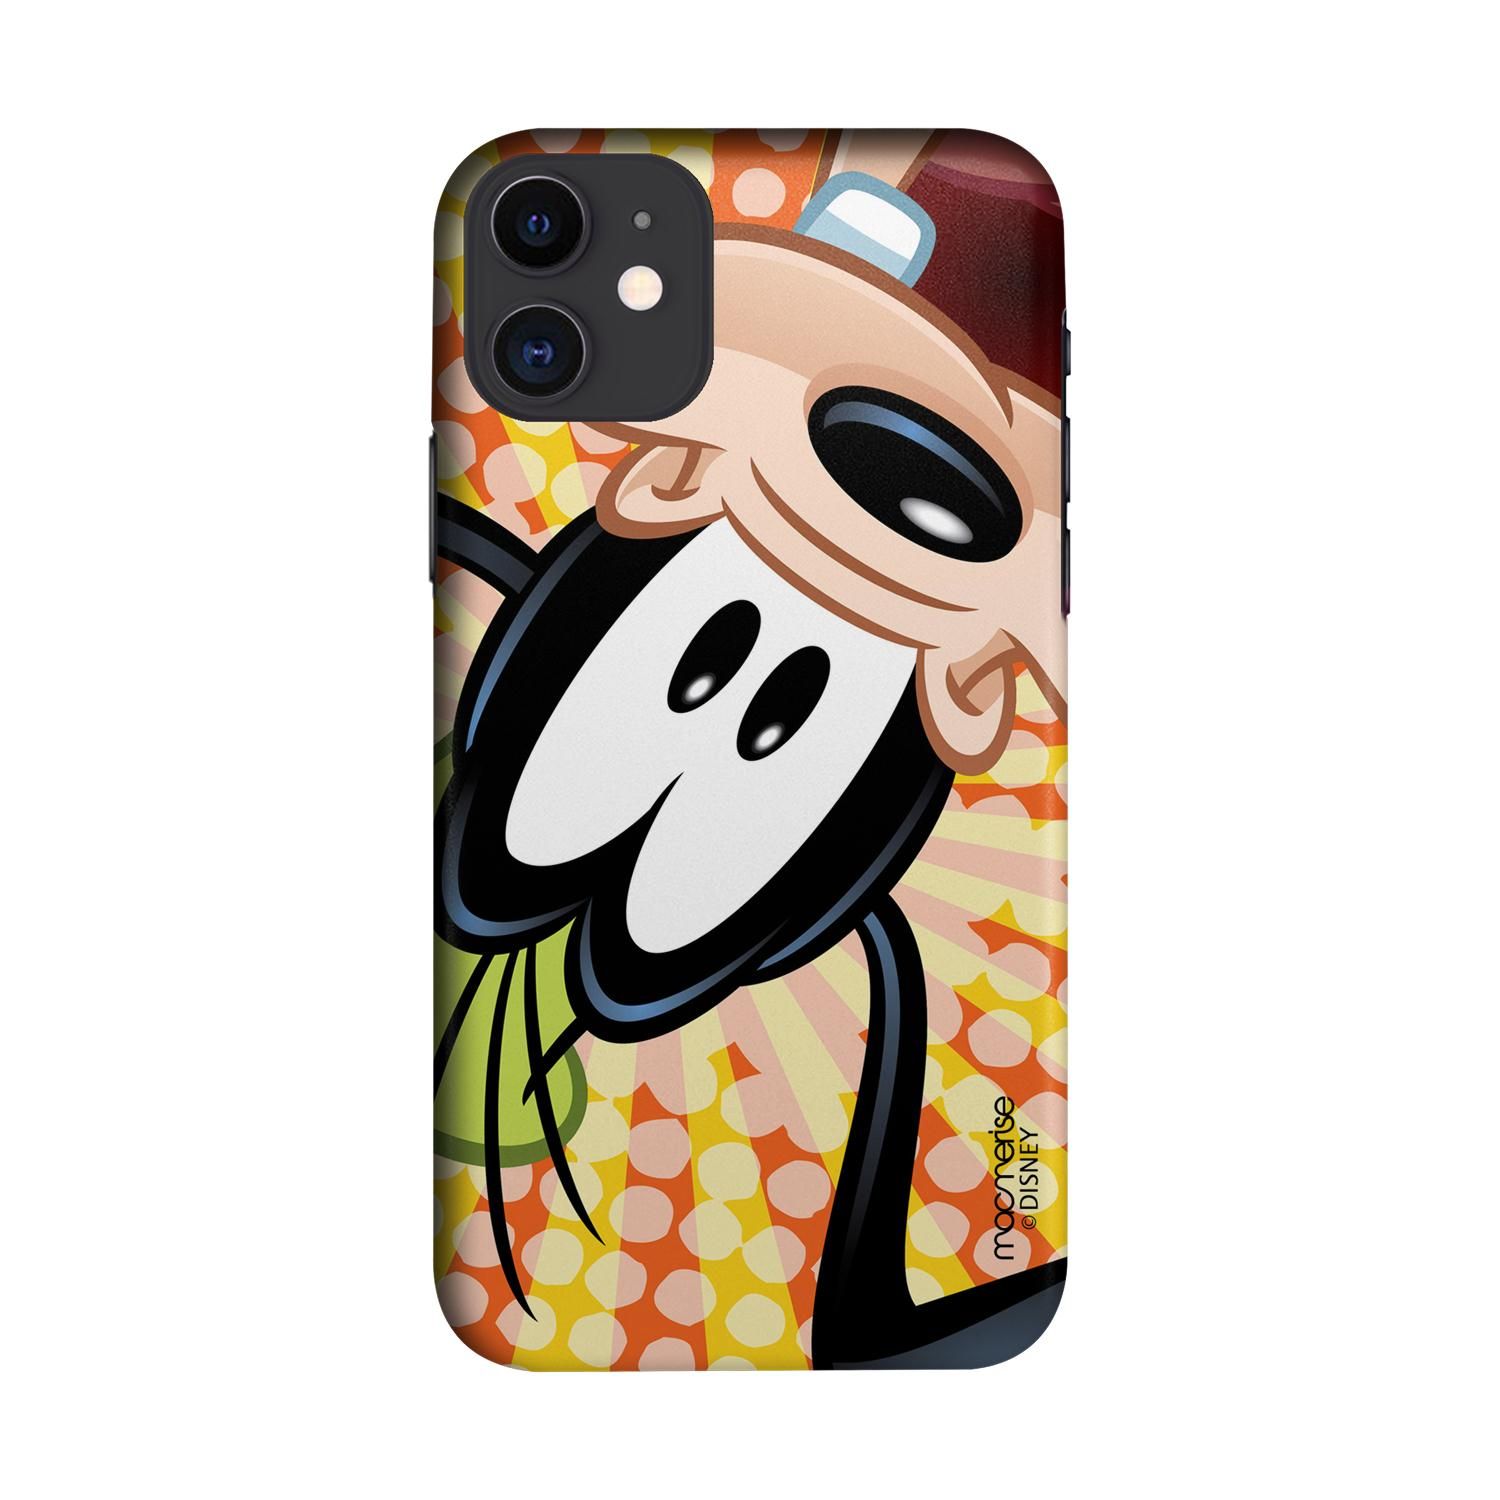 Buy Goofy Upside Down - Sleek Phone Case for iPhone 11 Online